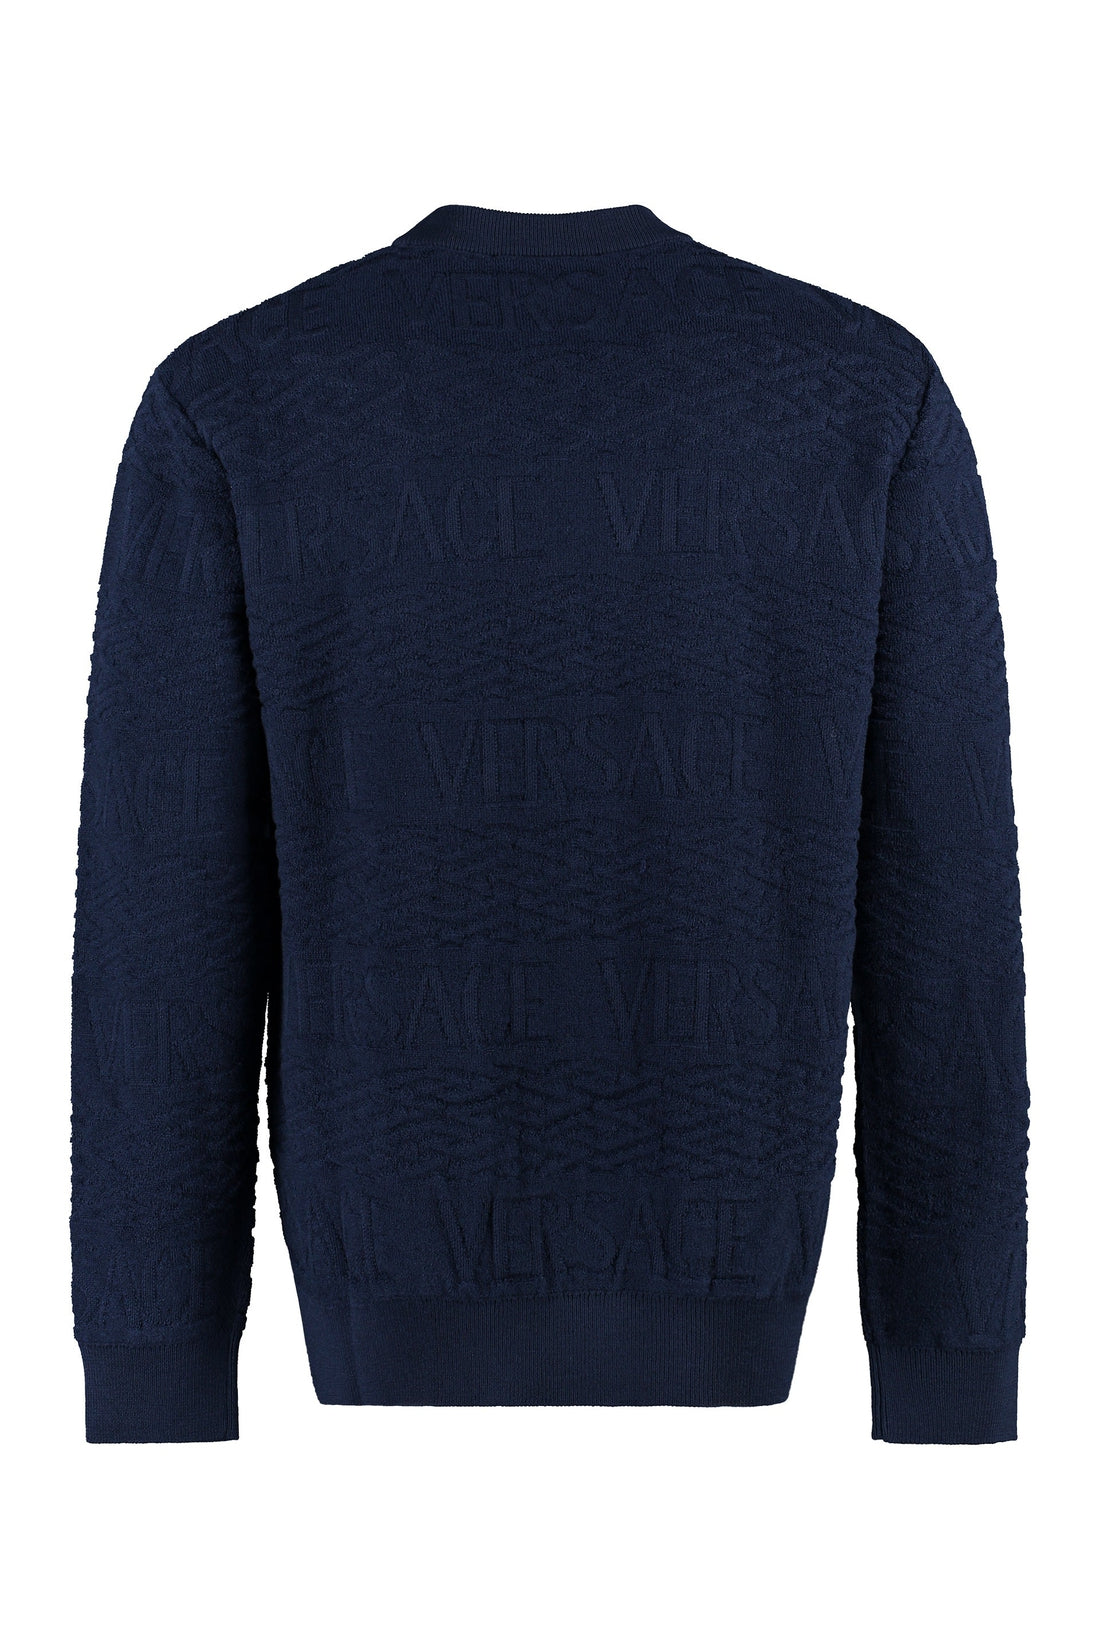 Versace-OUTLET-SALE-Crew-neck wool sweater-ARCHIVIST